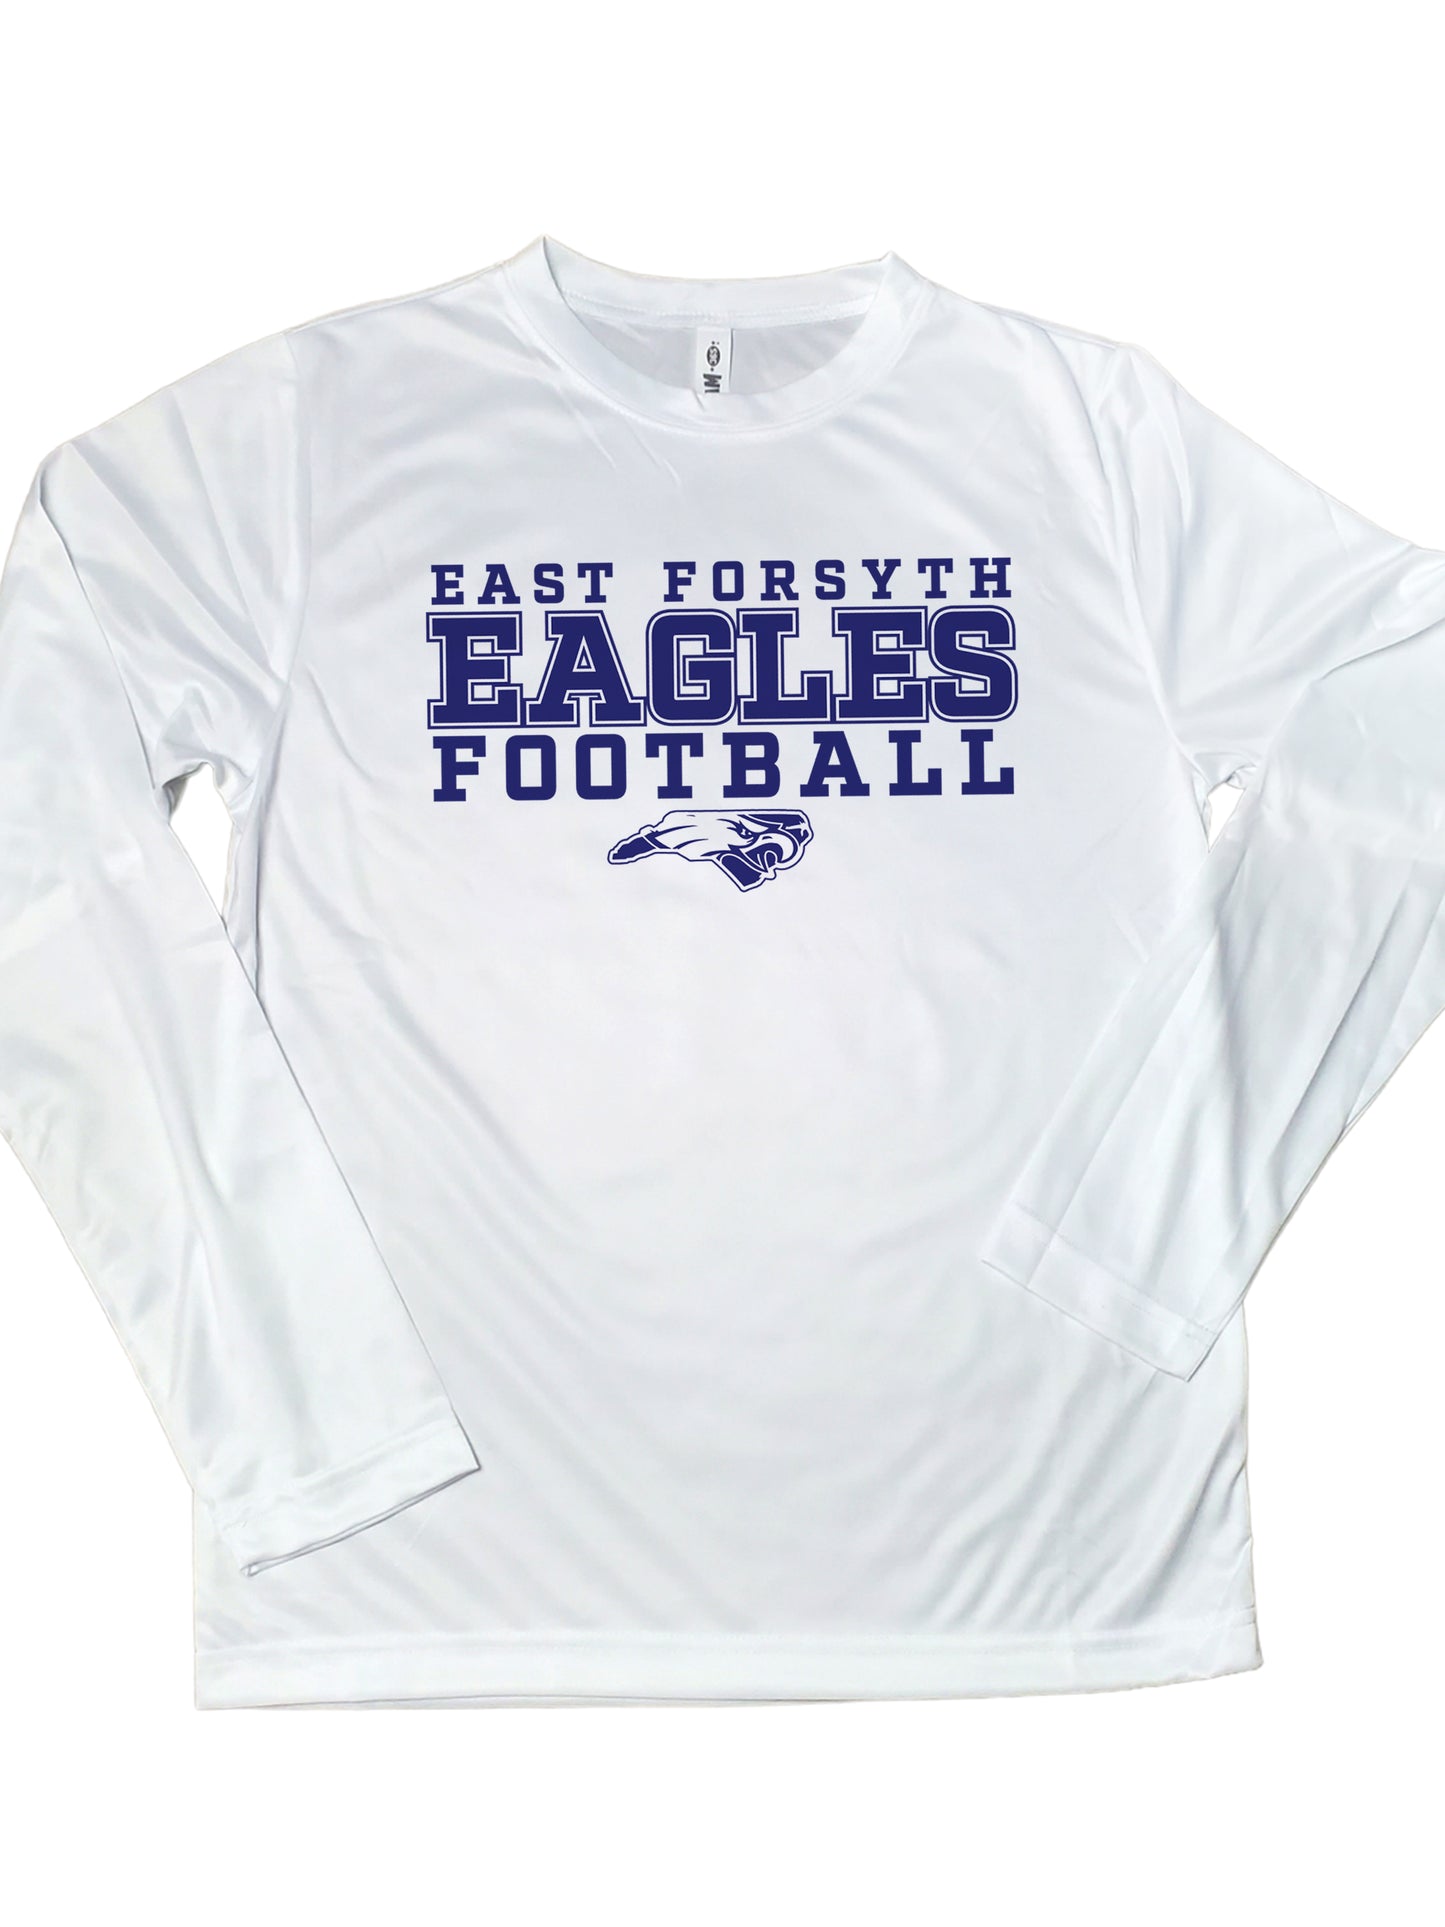 East Forsyth Eagles Football Long Sleeve Performance Shirt